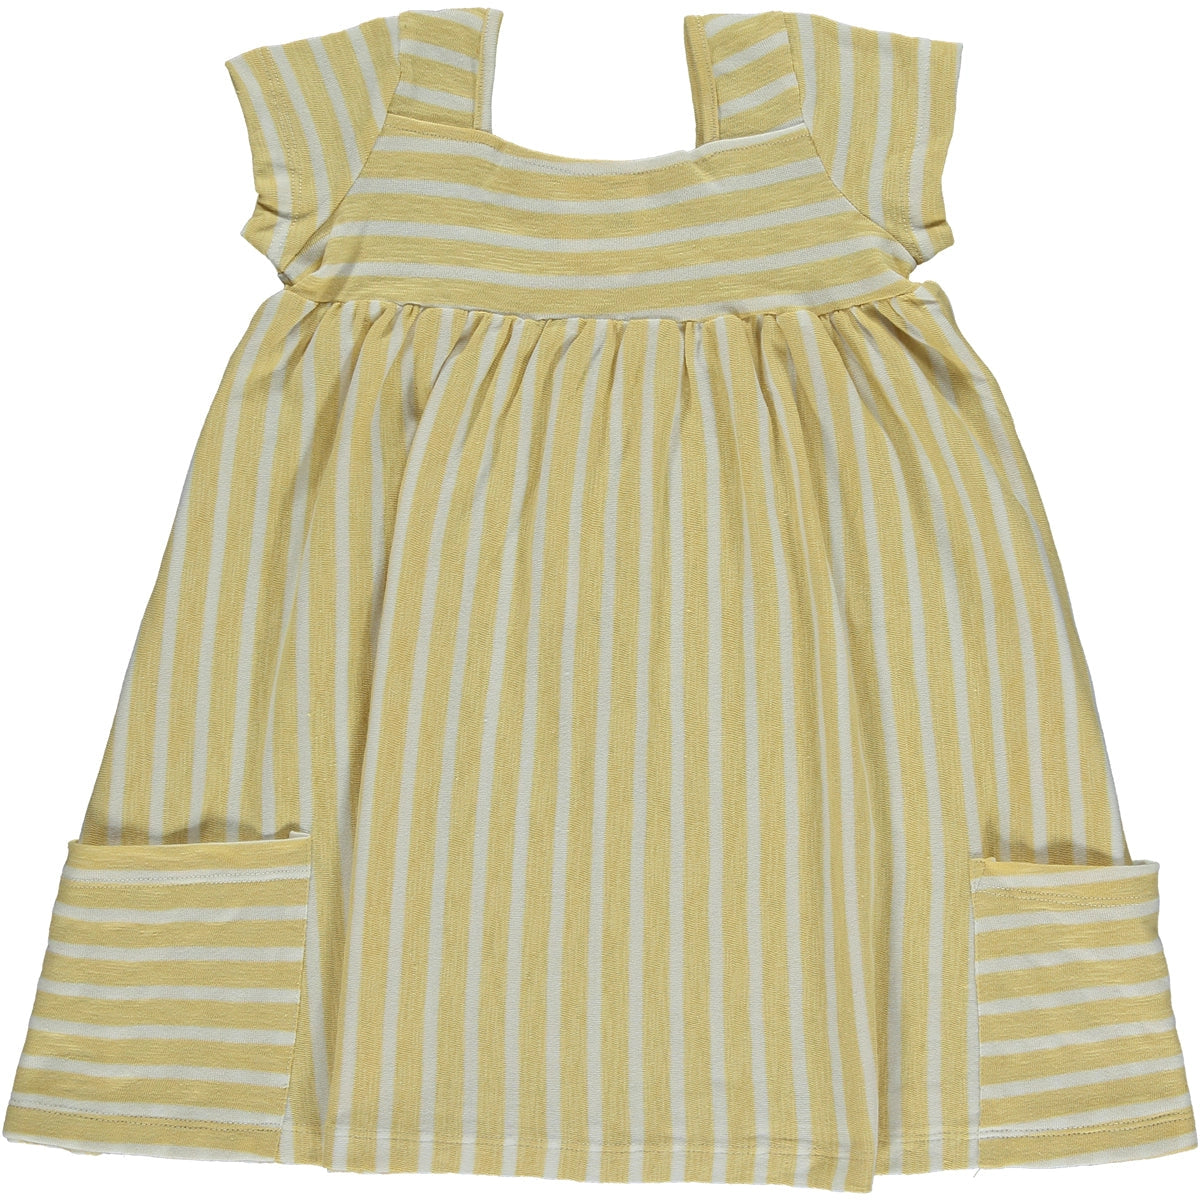 Vignette Rylie Dress - Yellow/Ivory Stripe